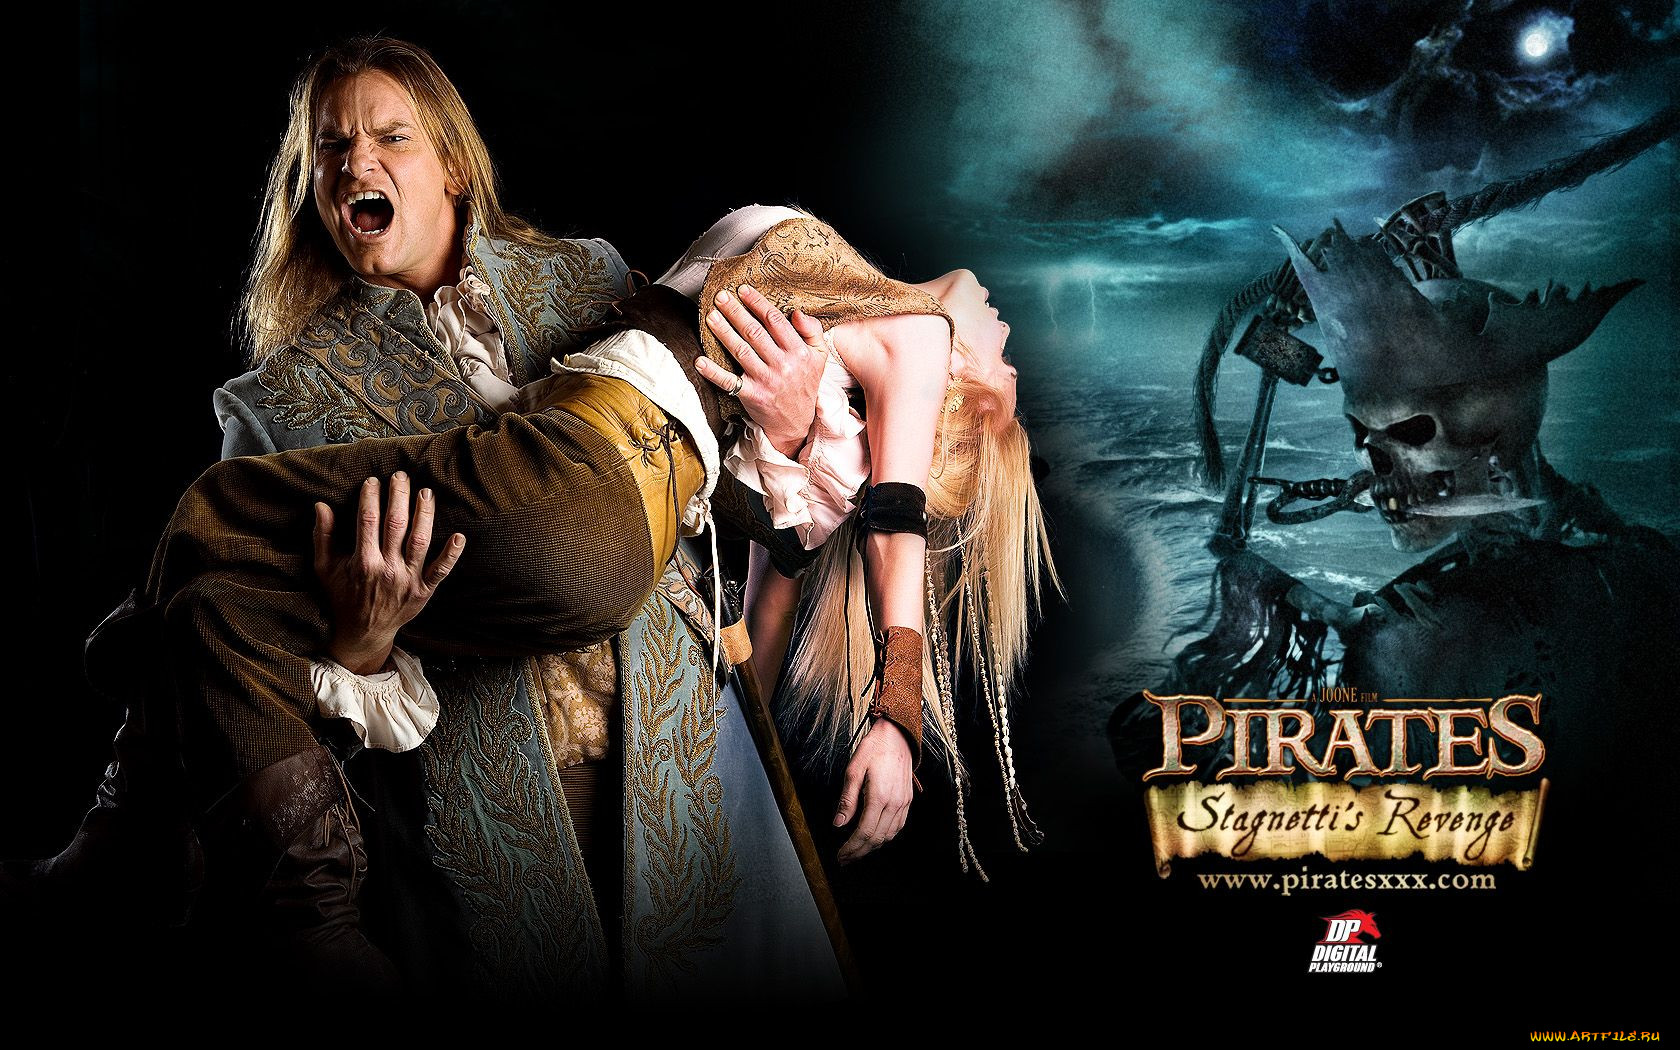 Pirates stagnettis revenge watch online